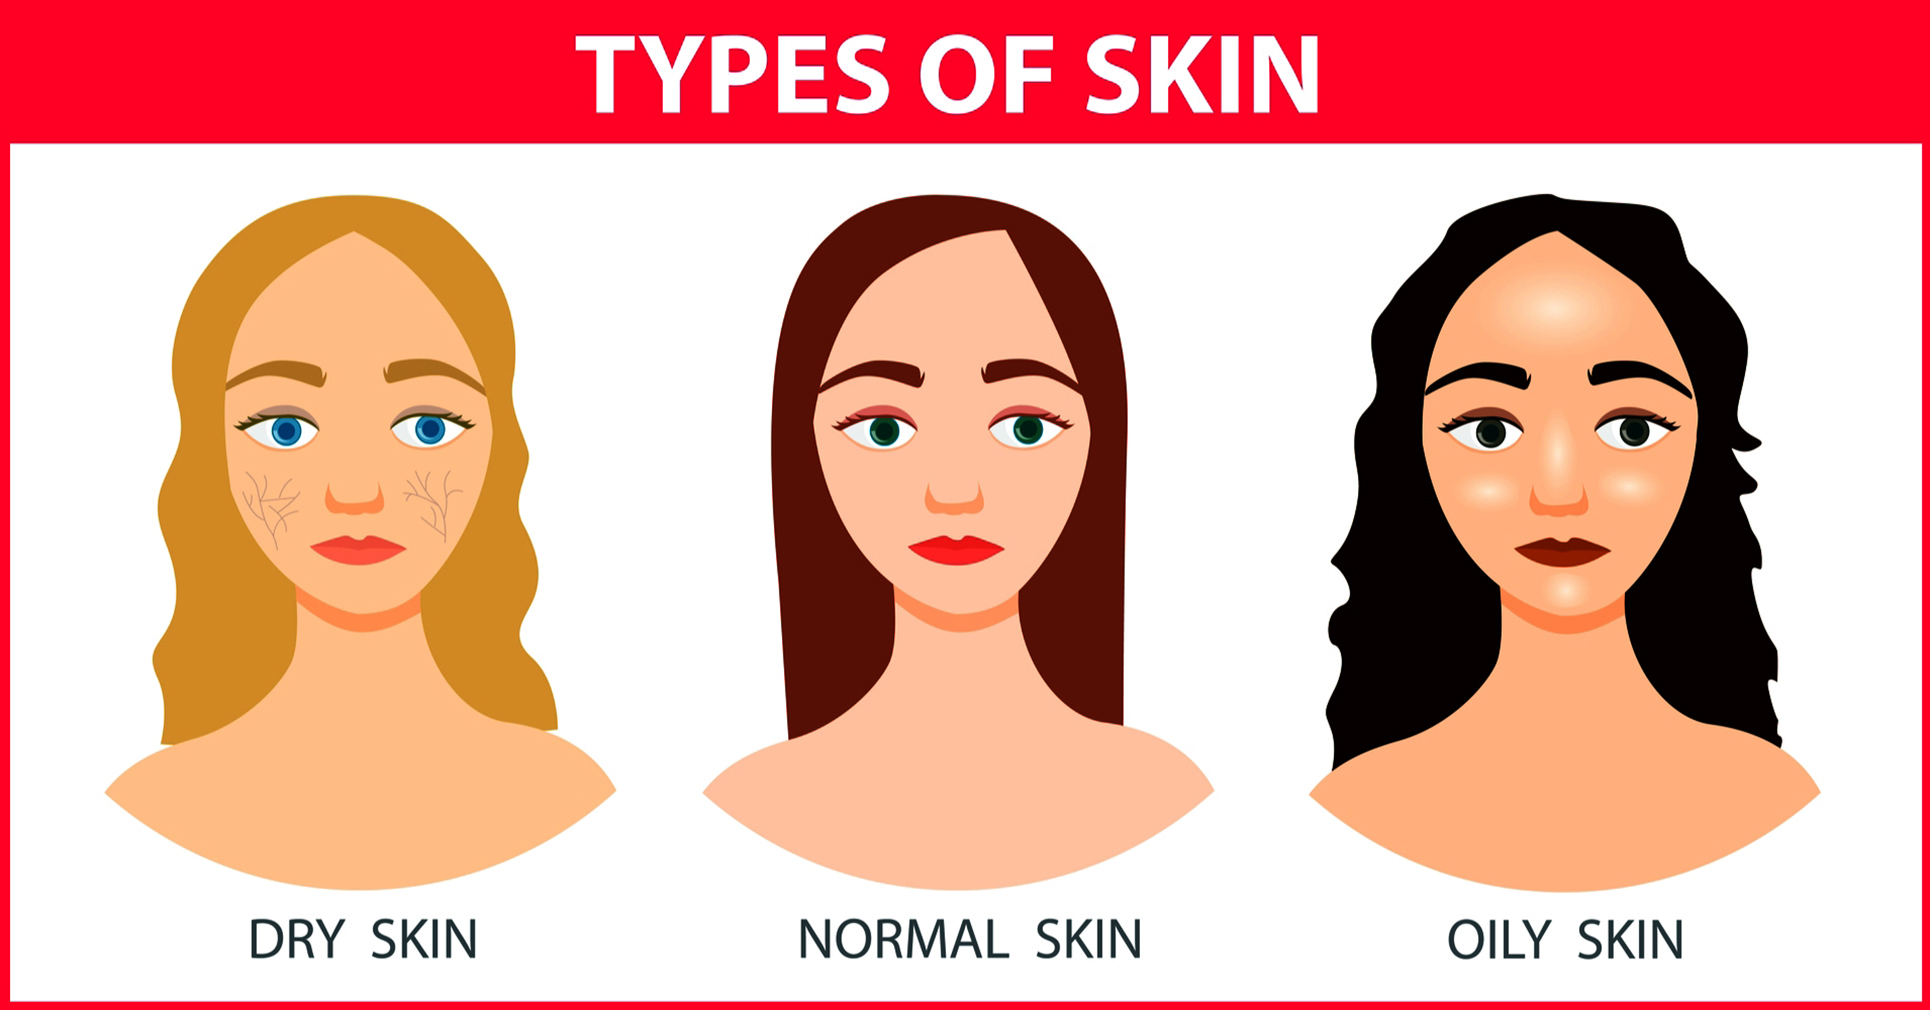 Some type of skin